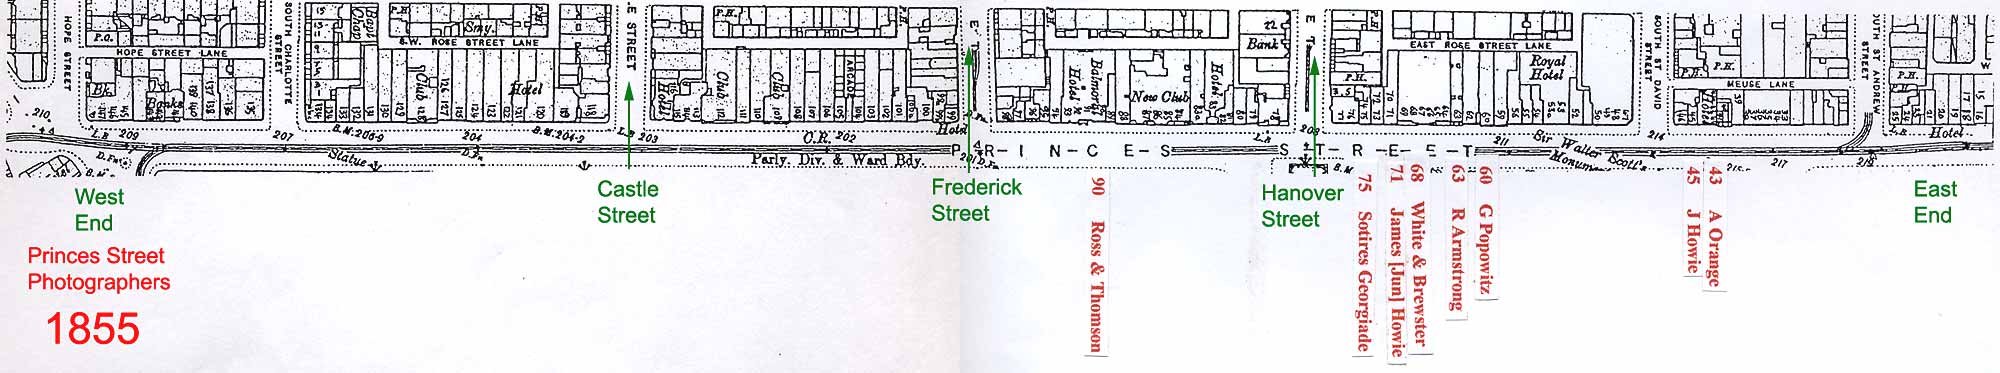 Map of Princes Street studios in 1855